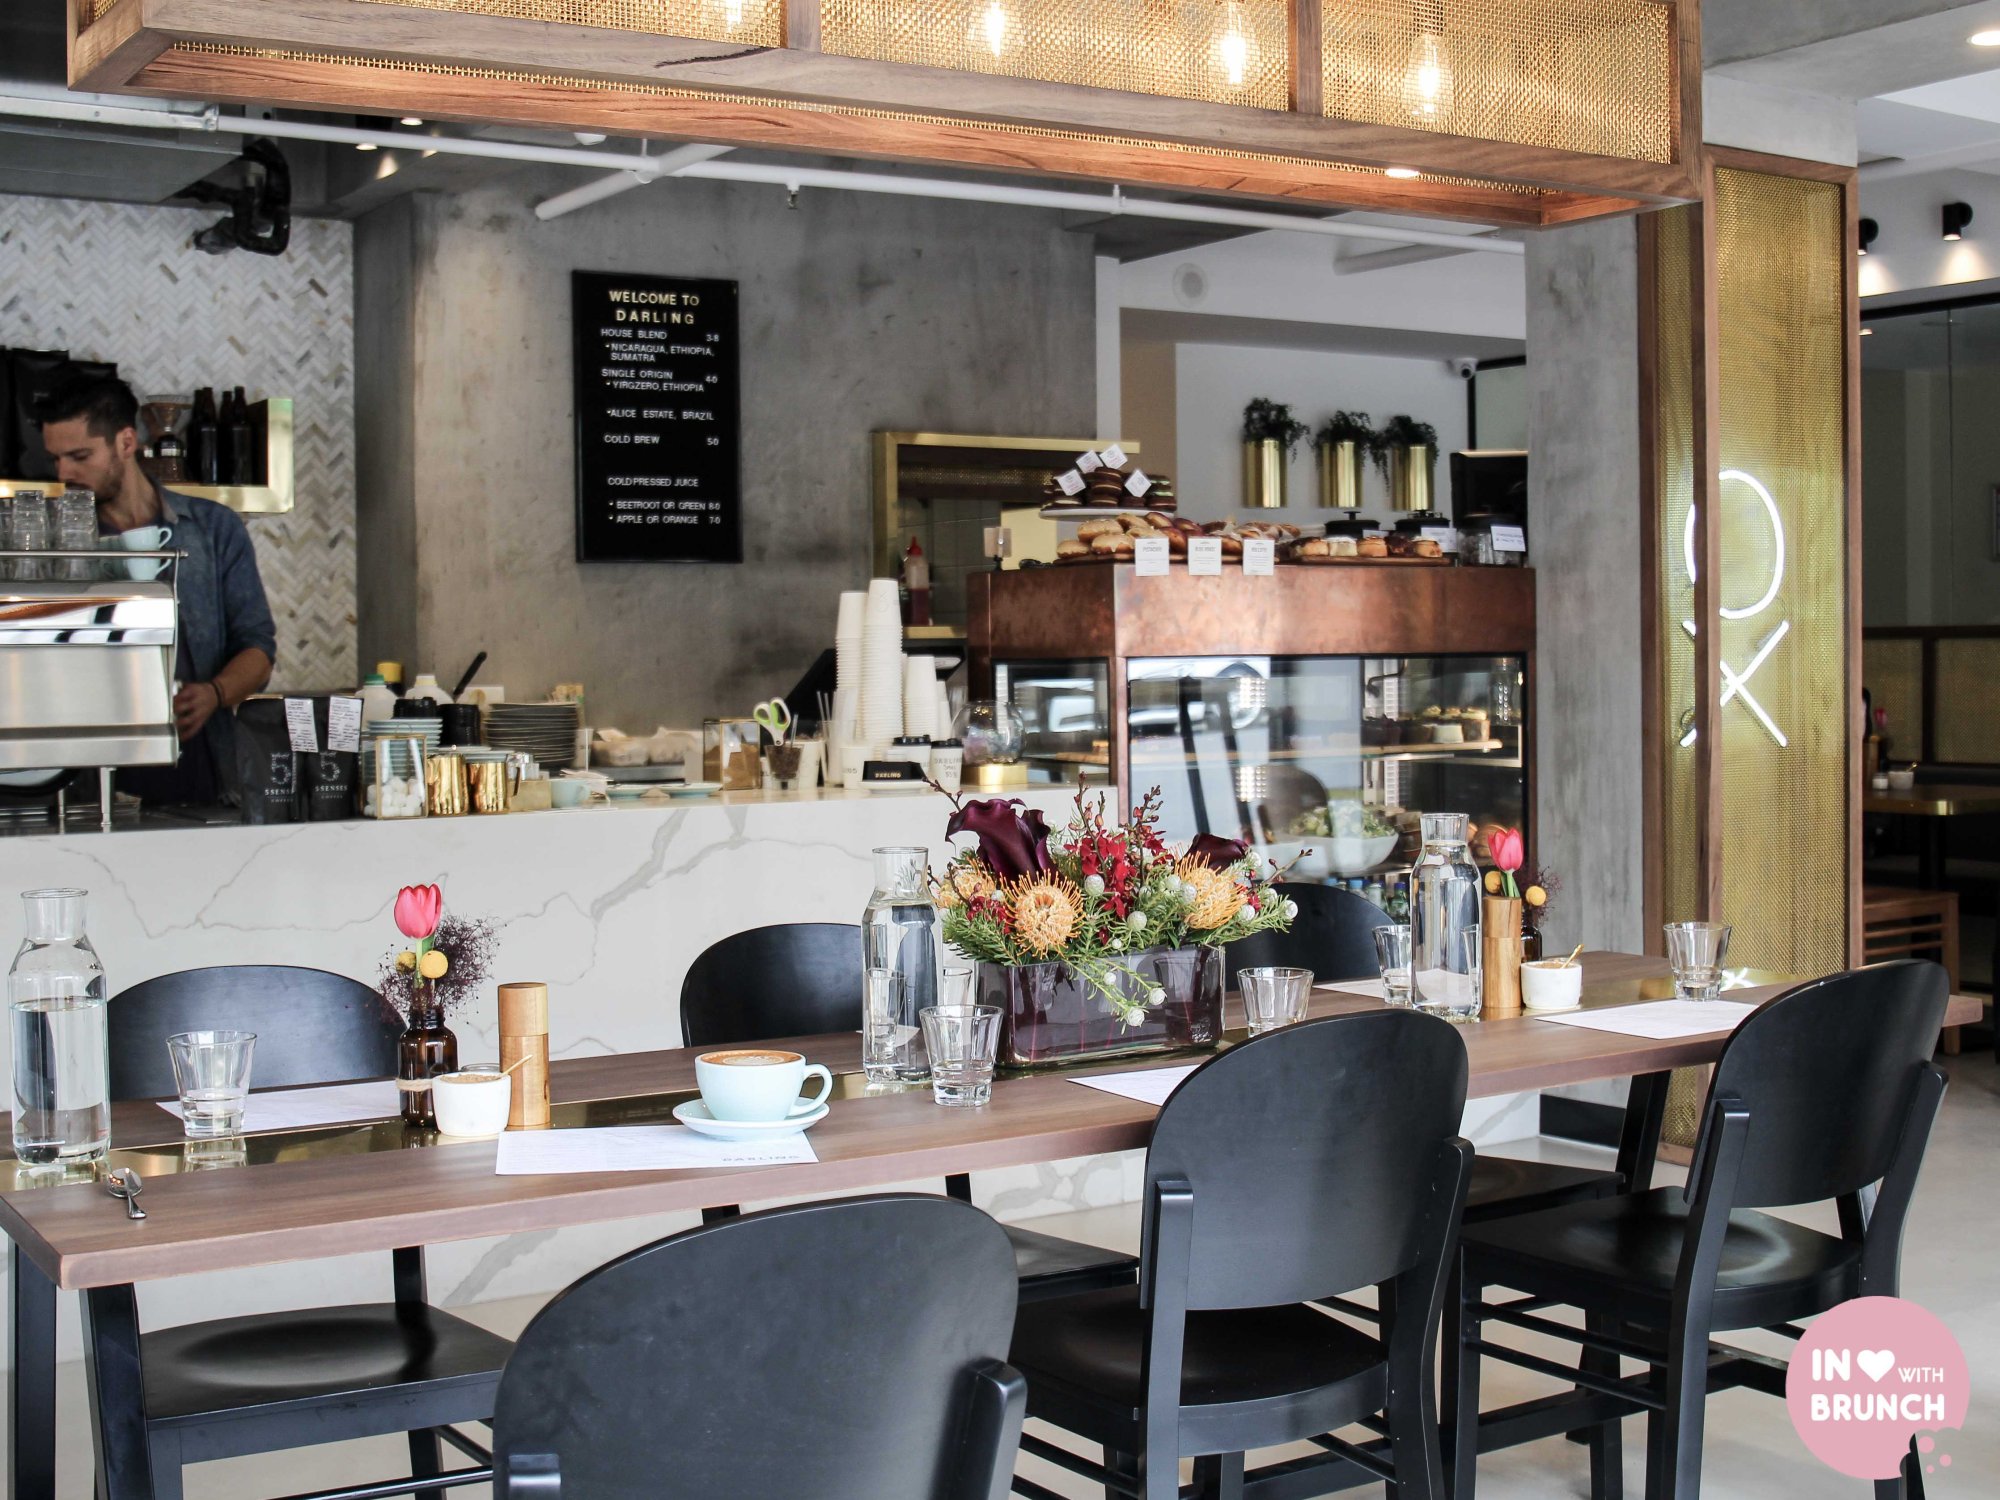 Darling Cafe South Yarra Interior (1 of 1)